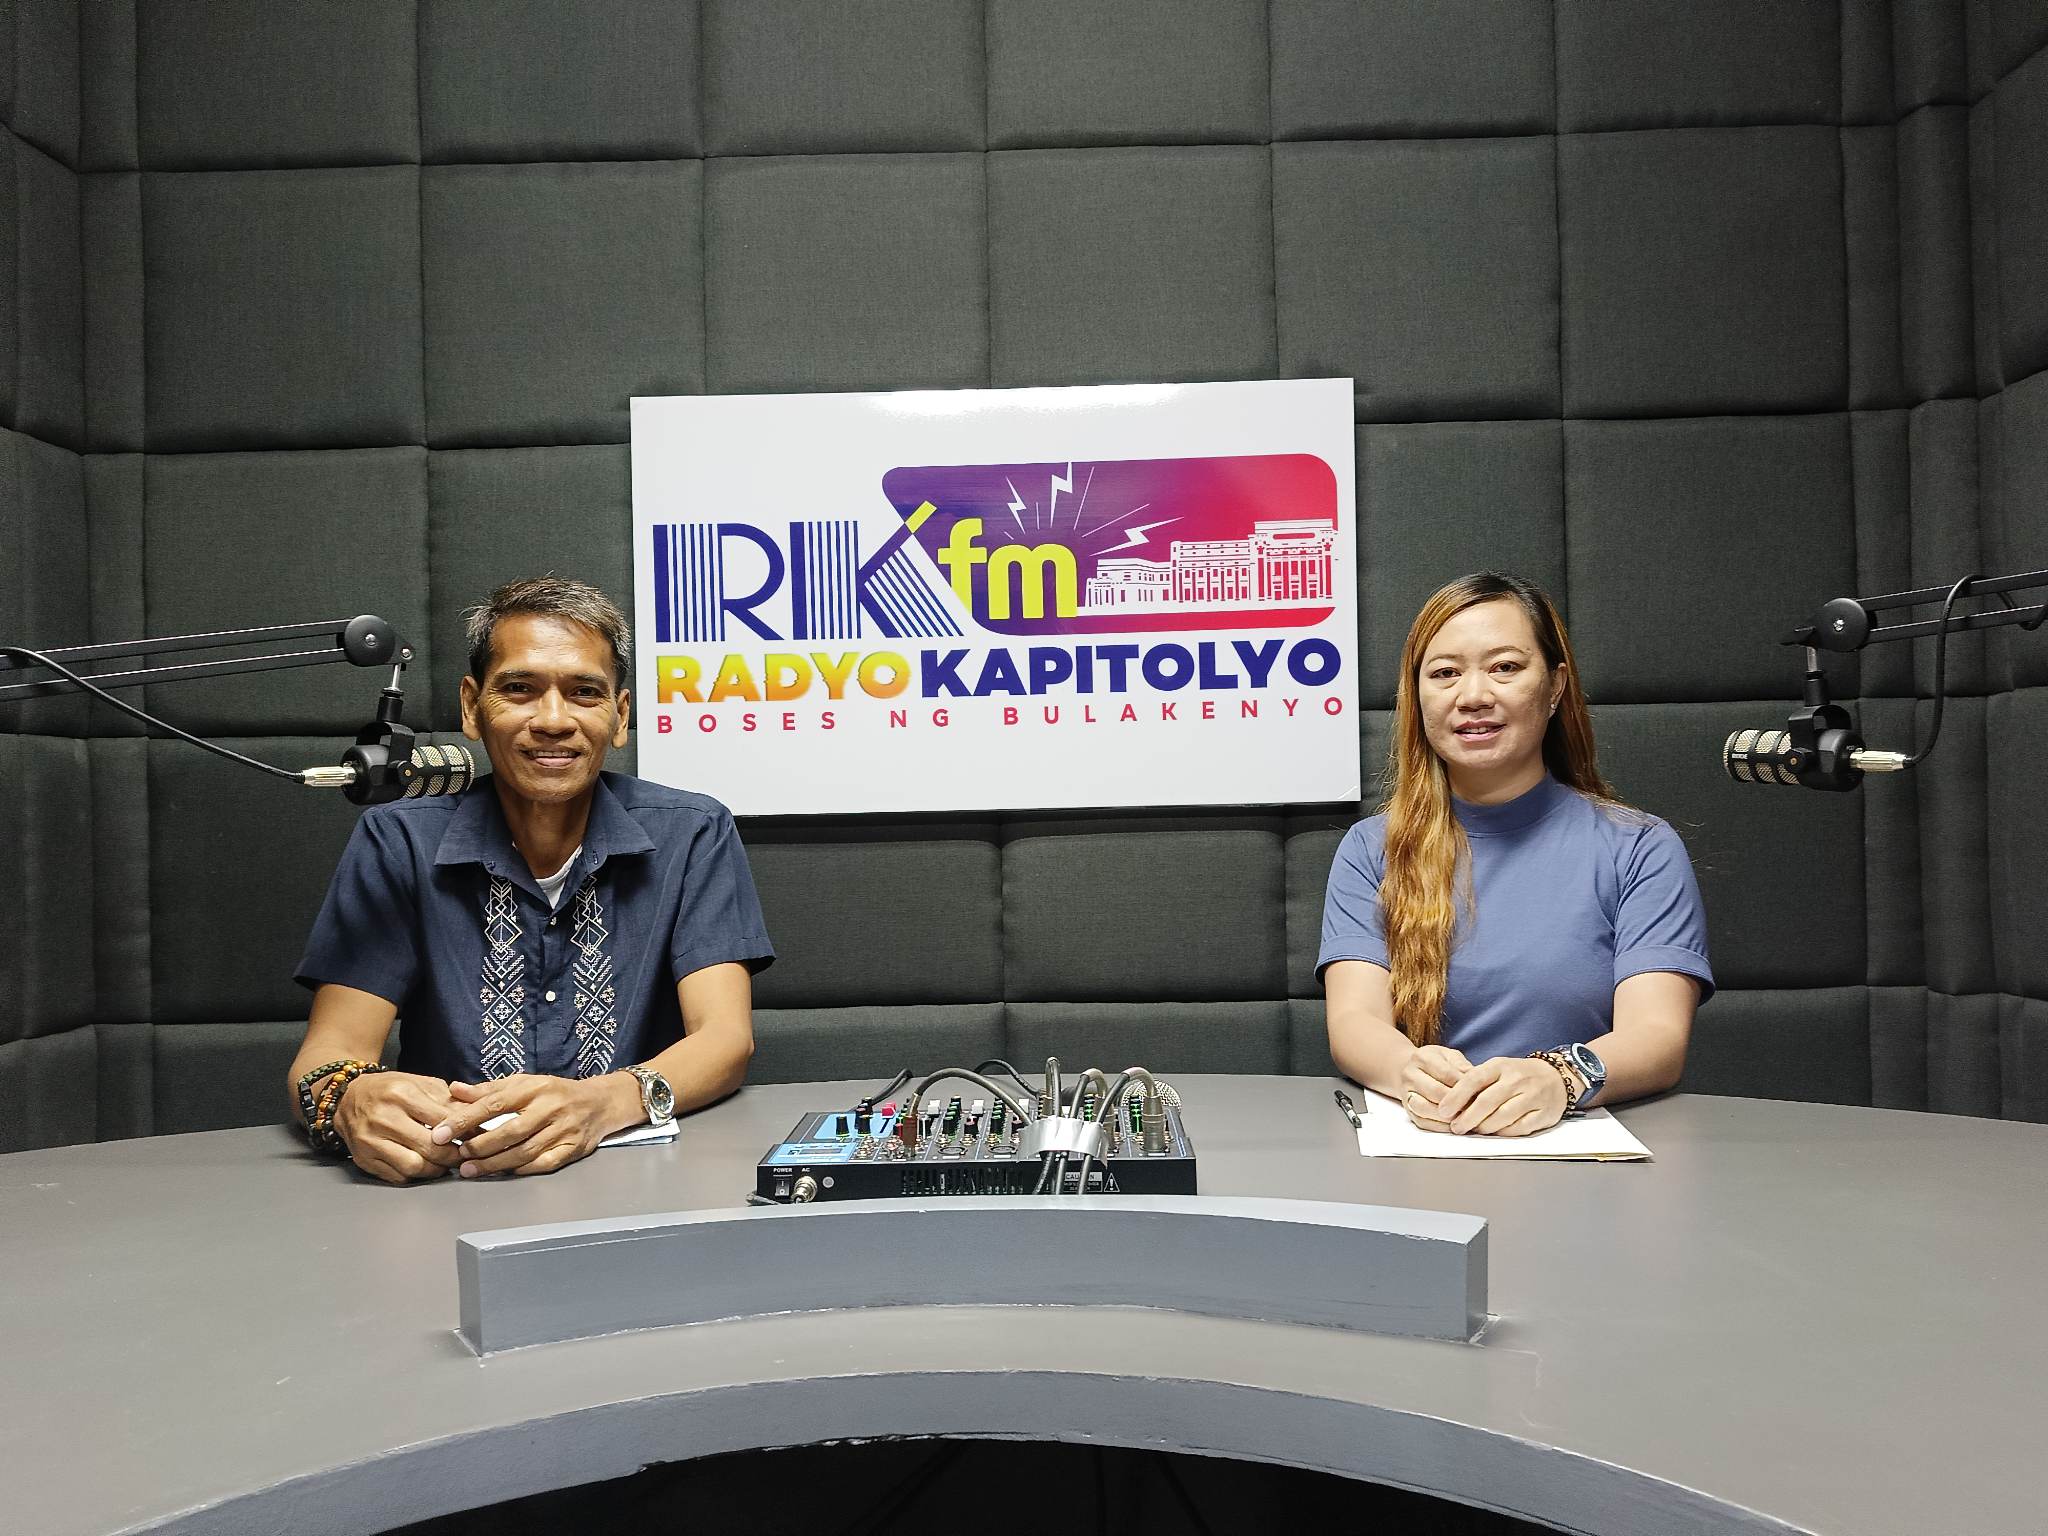 Radyo Kapitolyo hosted by: Ayessha Abiol and Raul Agustin